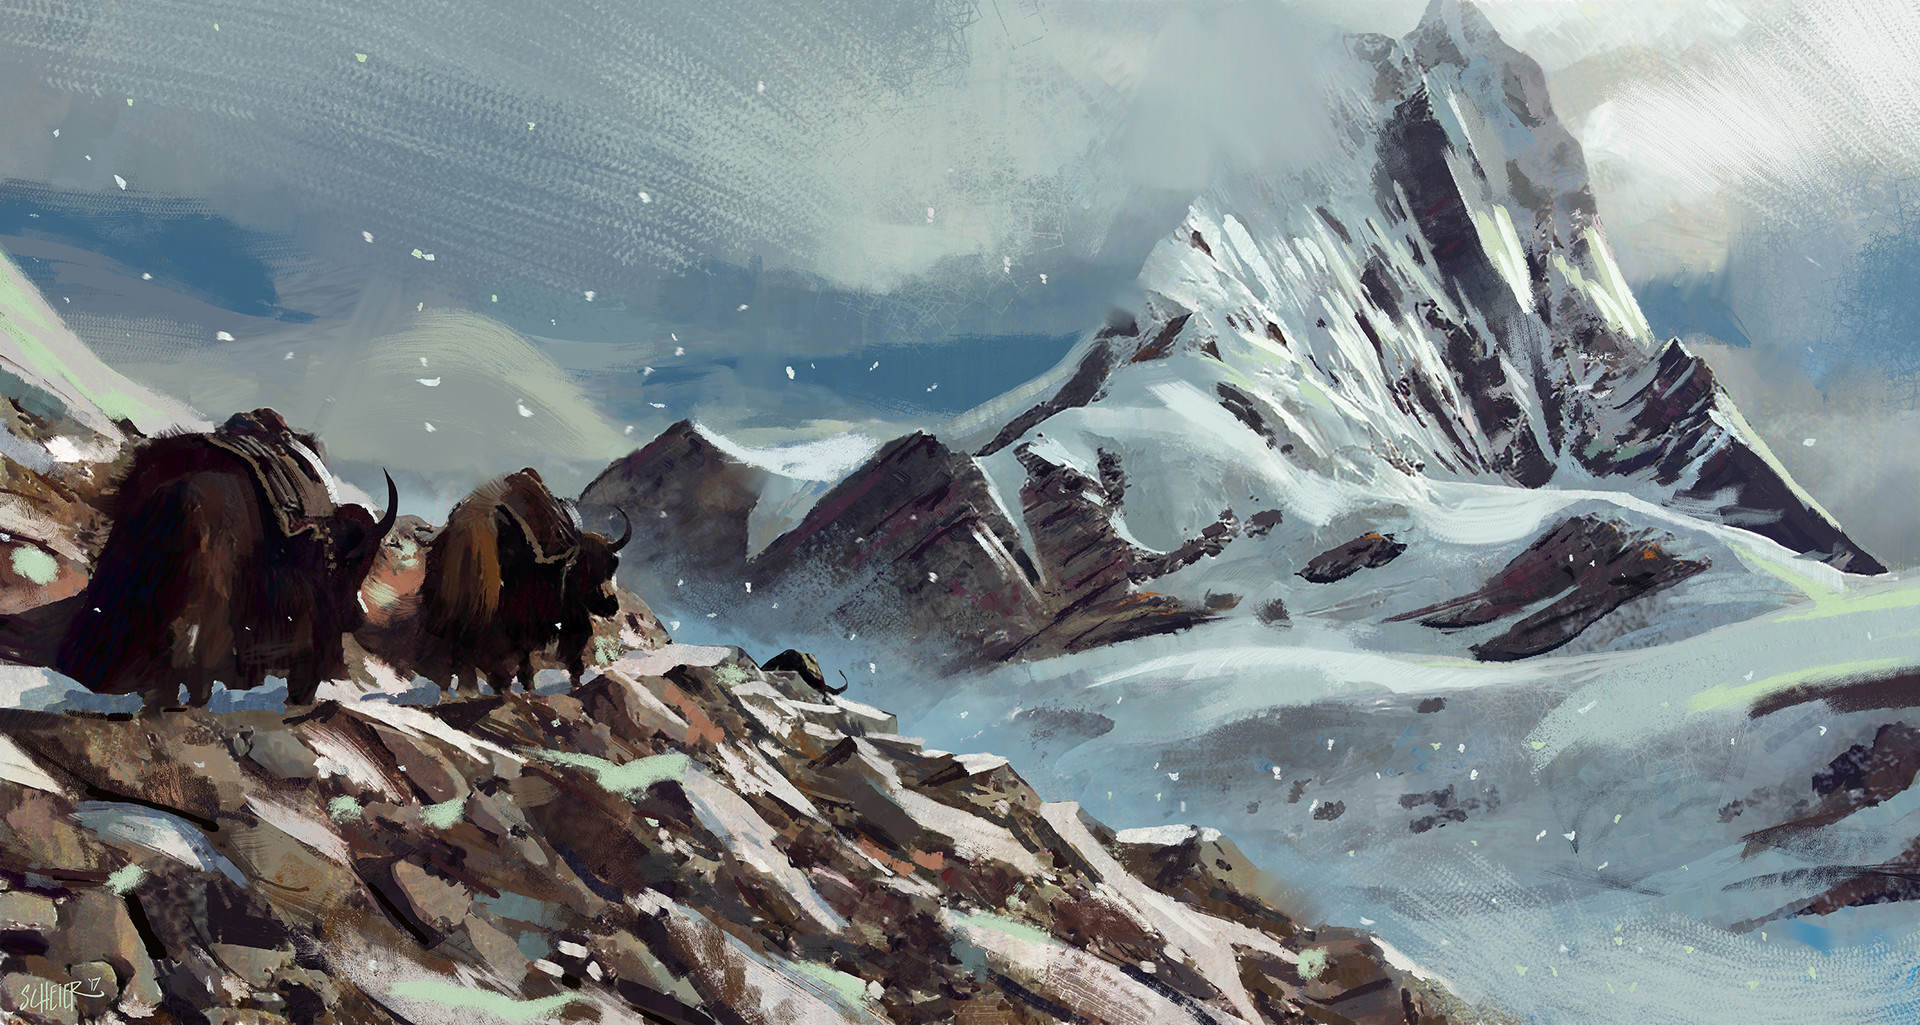 jason-scheier-mountain-yaks.jpg